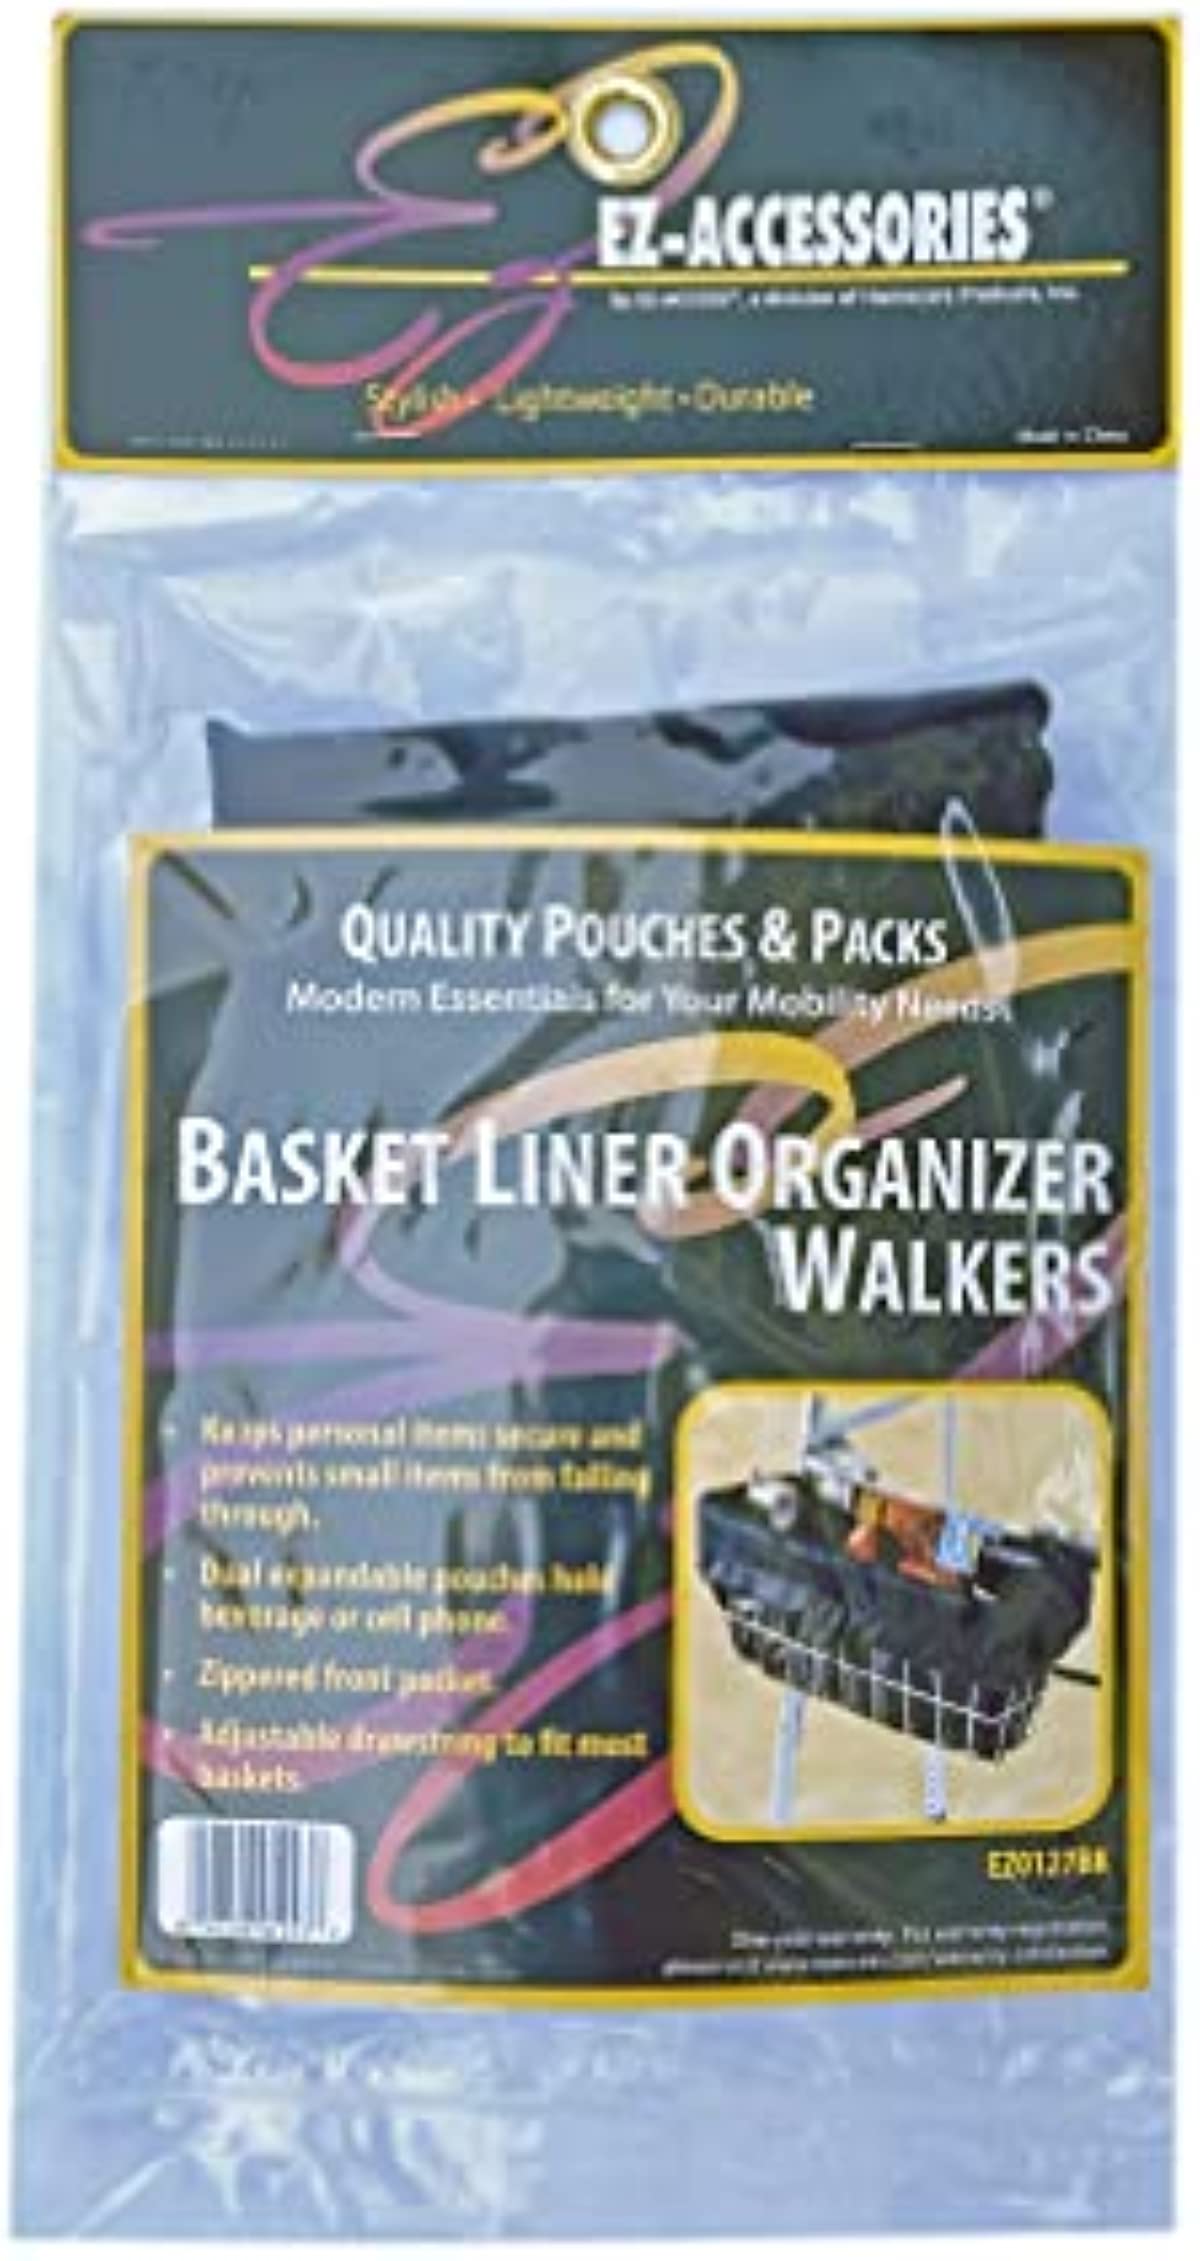 EZ-ACCESS EZ-ACCESSORIES Walker Basket Liner with Pockets